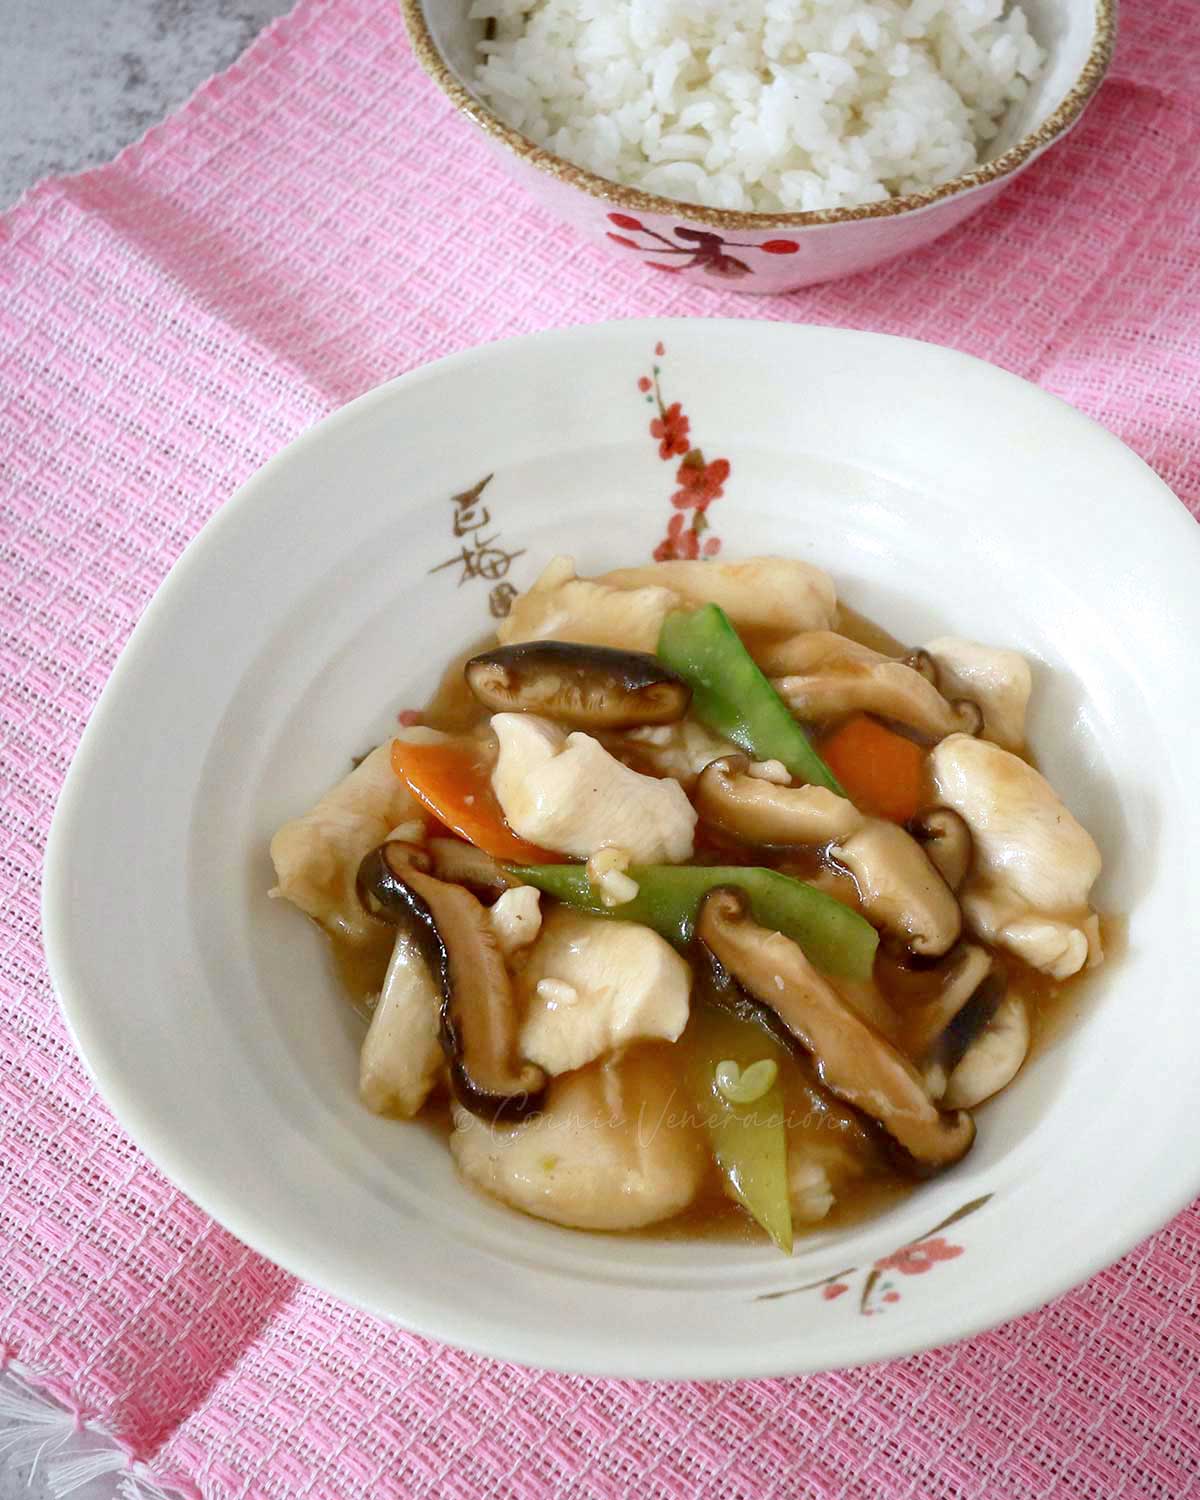 Moo goo gai pan (chicken and mushroom stir fry) in white shallow bowl